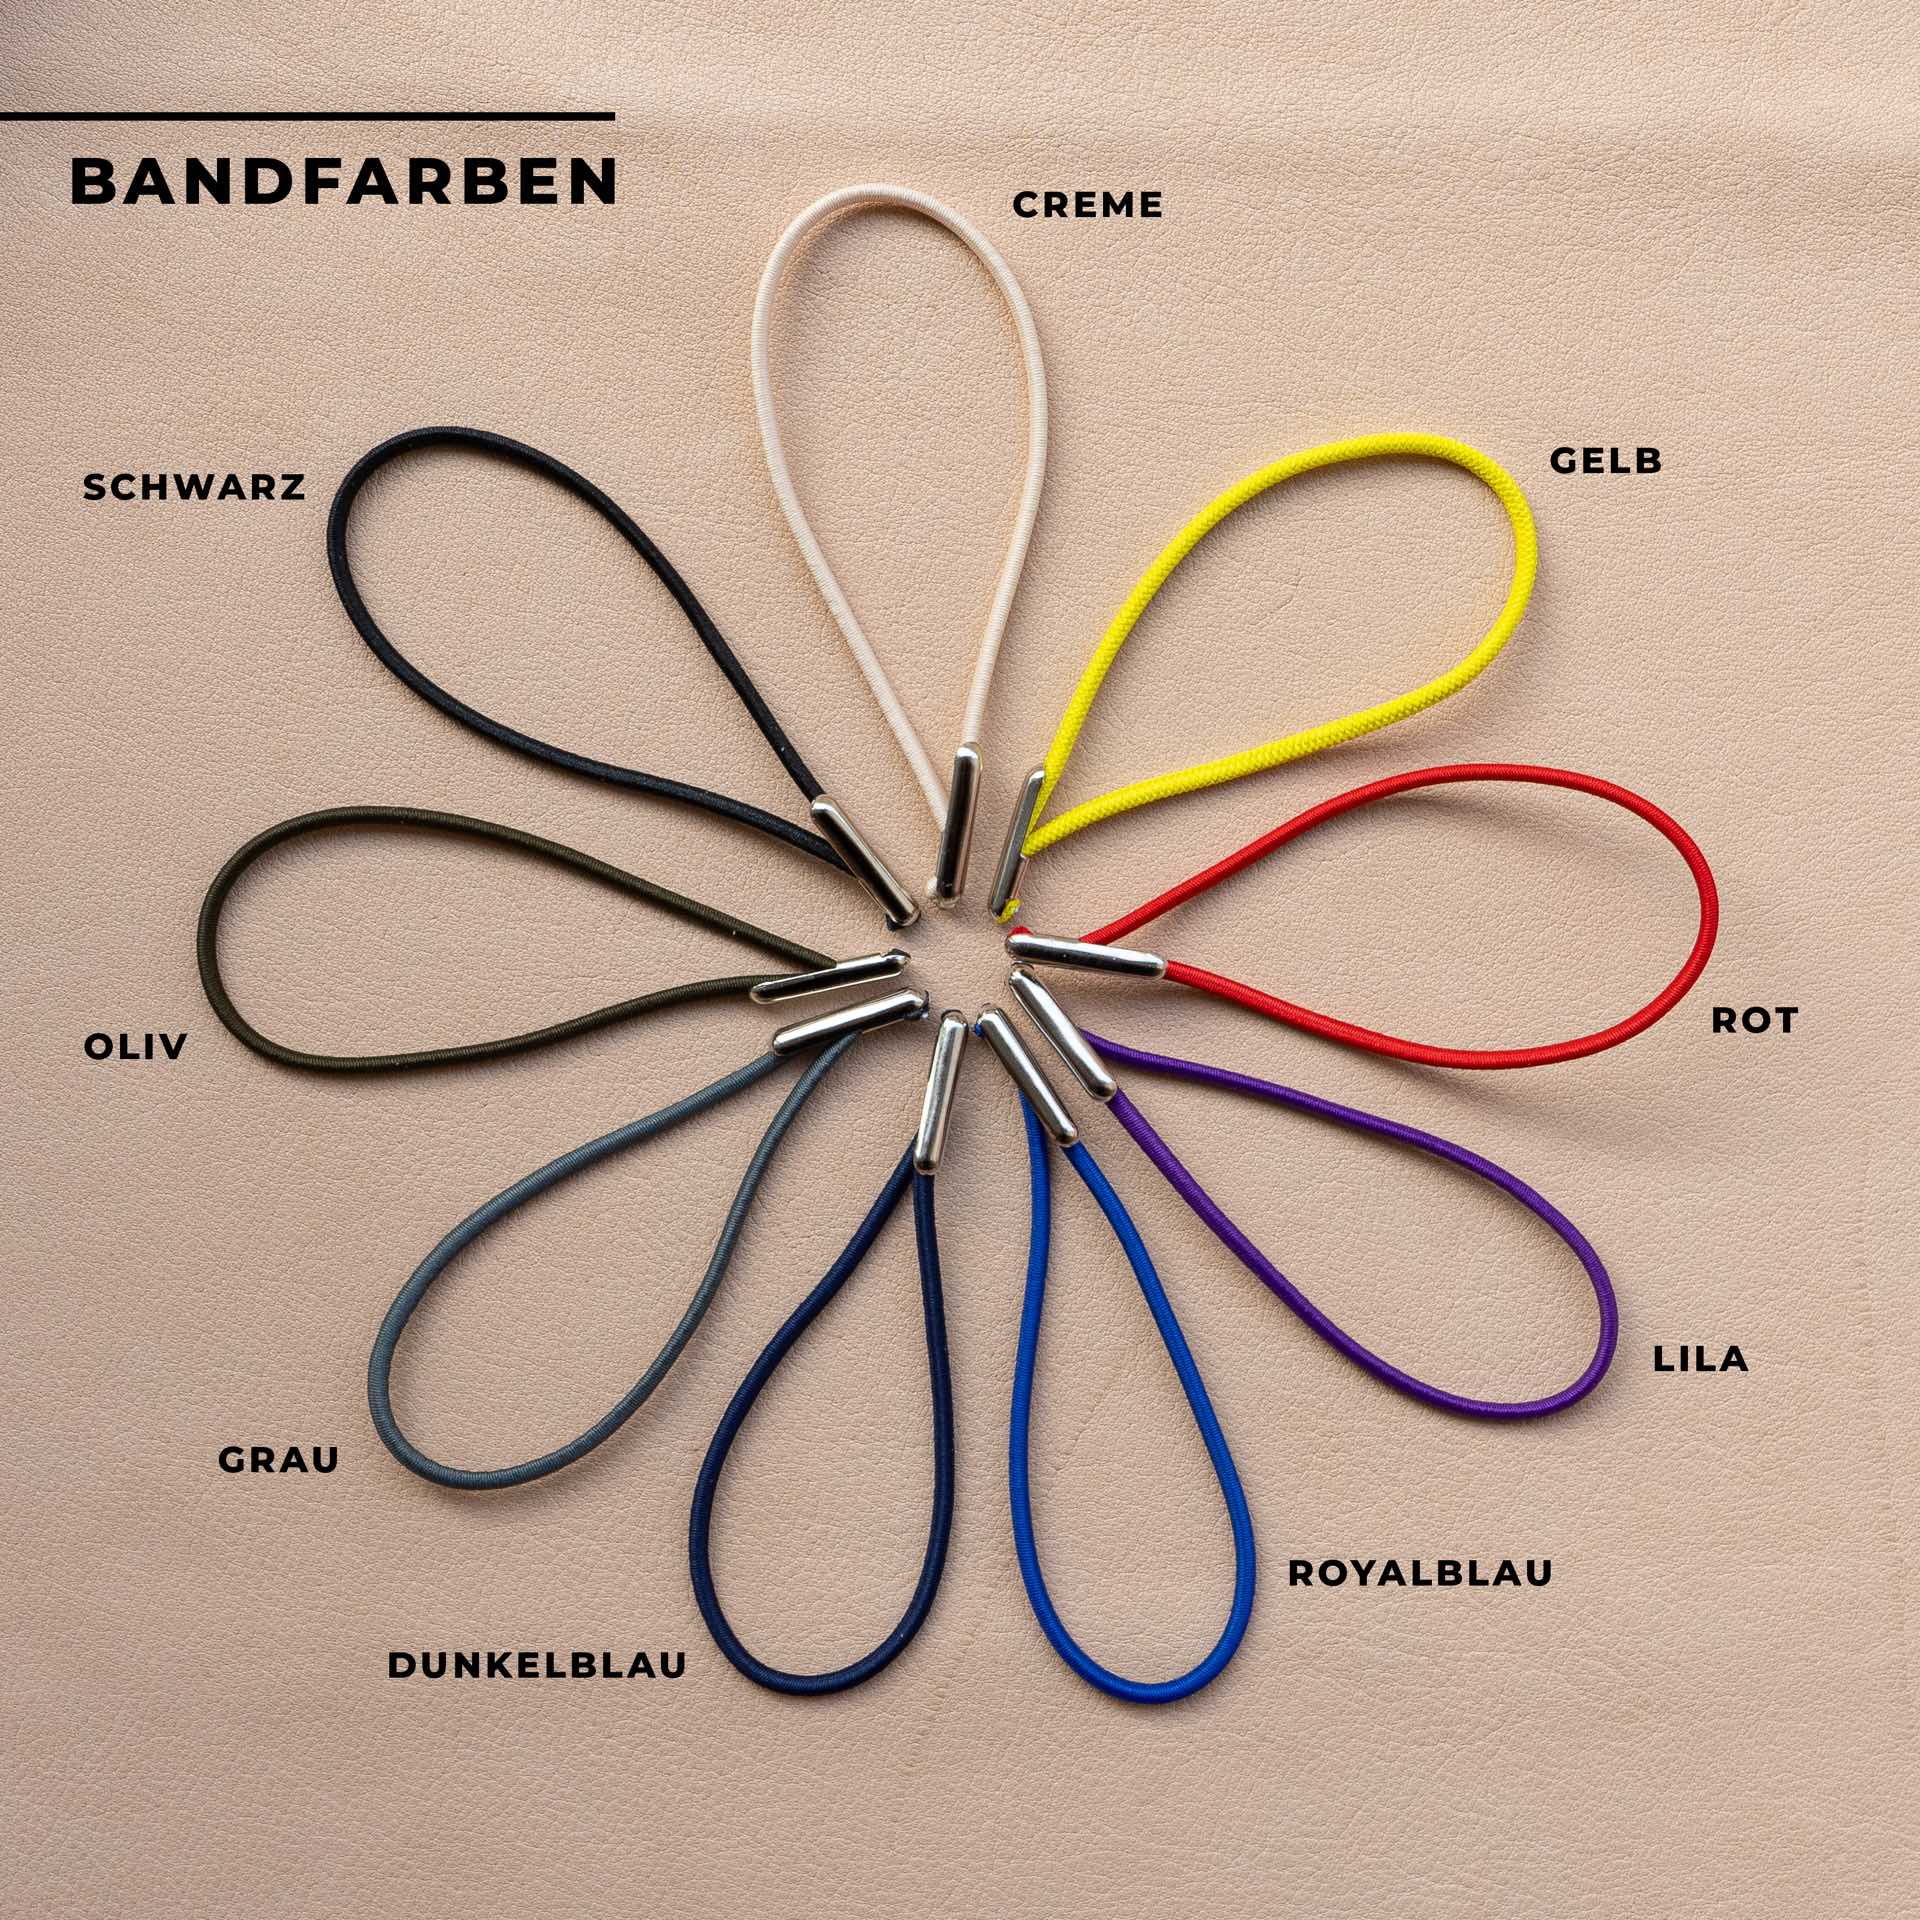 Bandfarben-Franziska-Klee-beige-bandfarben